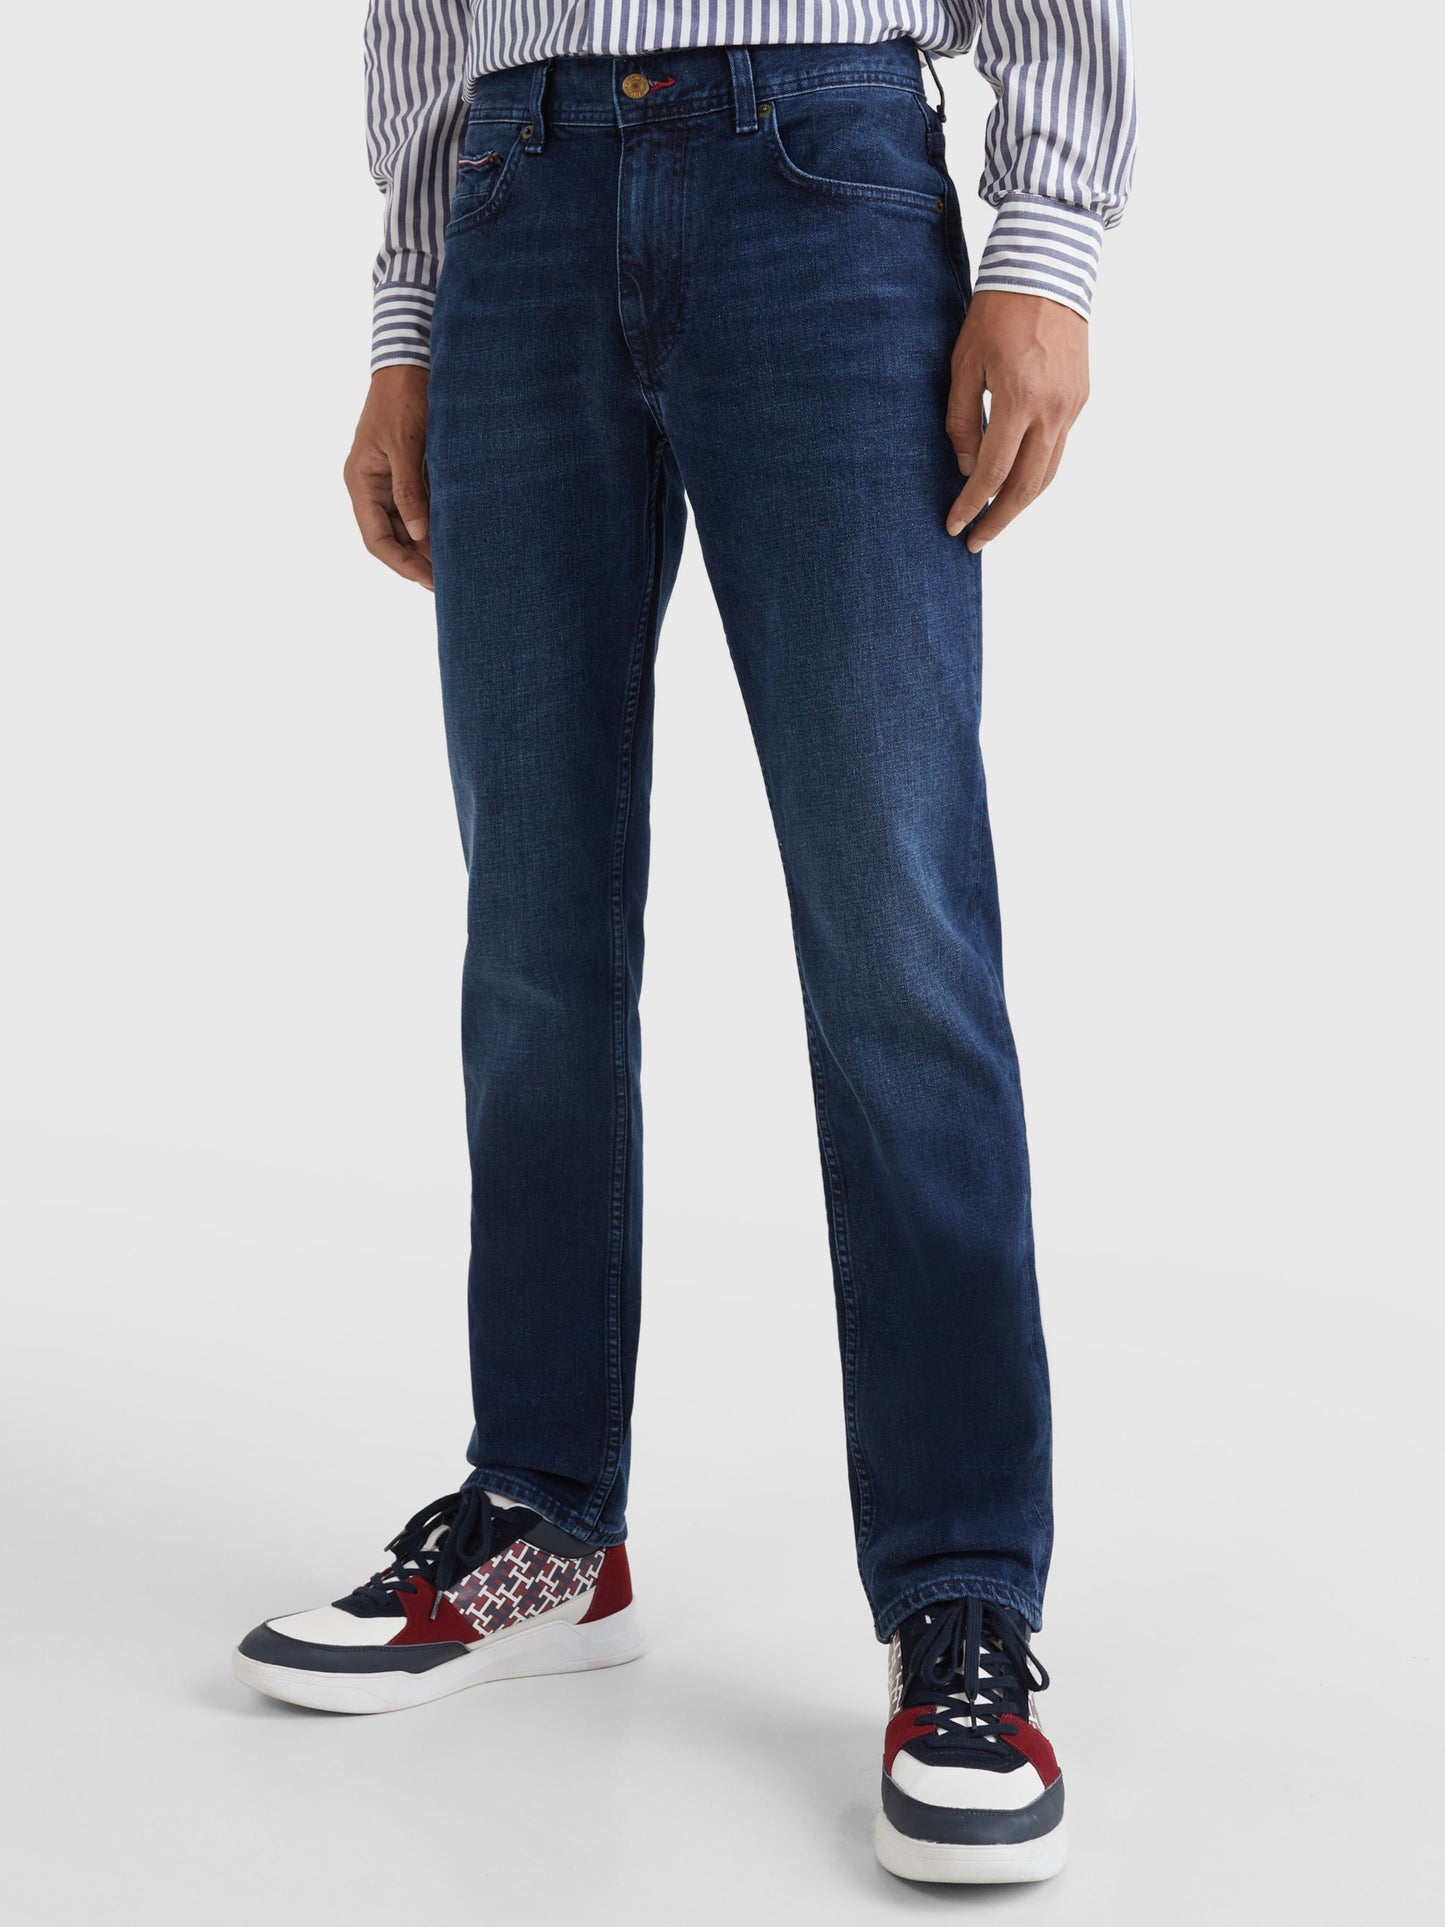 Tommy Hilfiger Denton Straight Fit Jeans Bridger Indigo